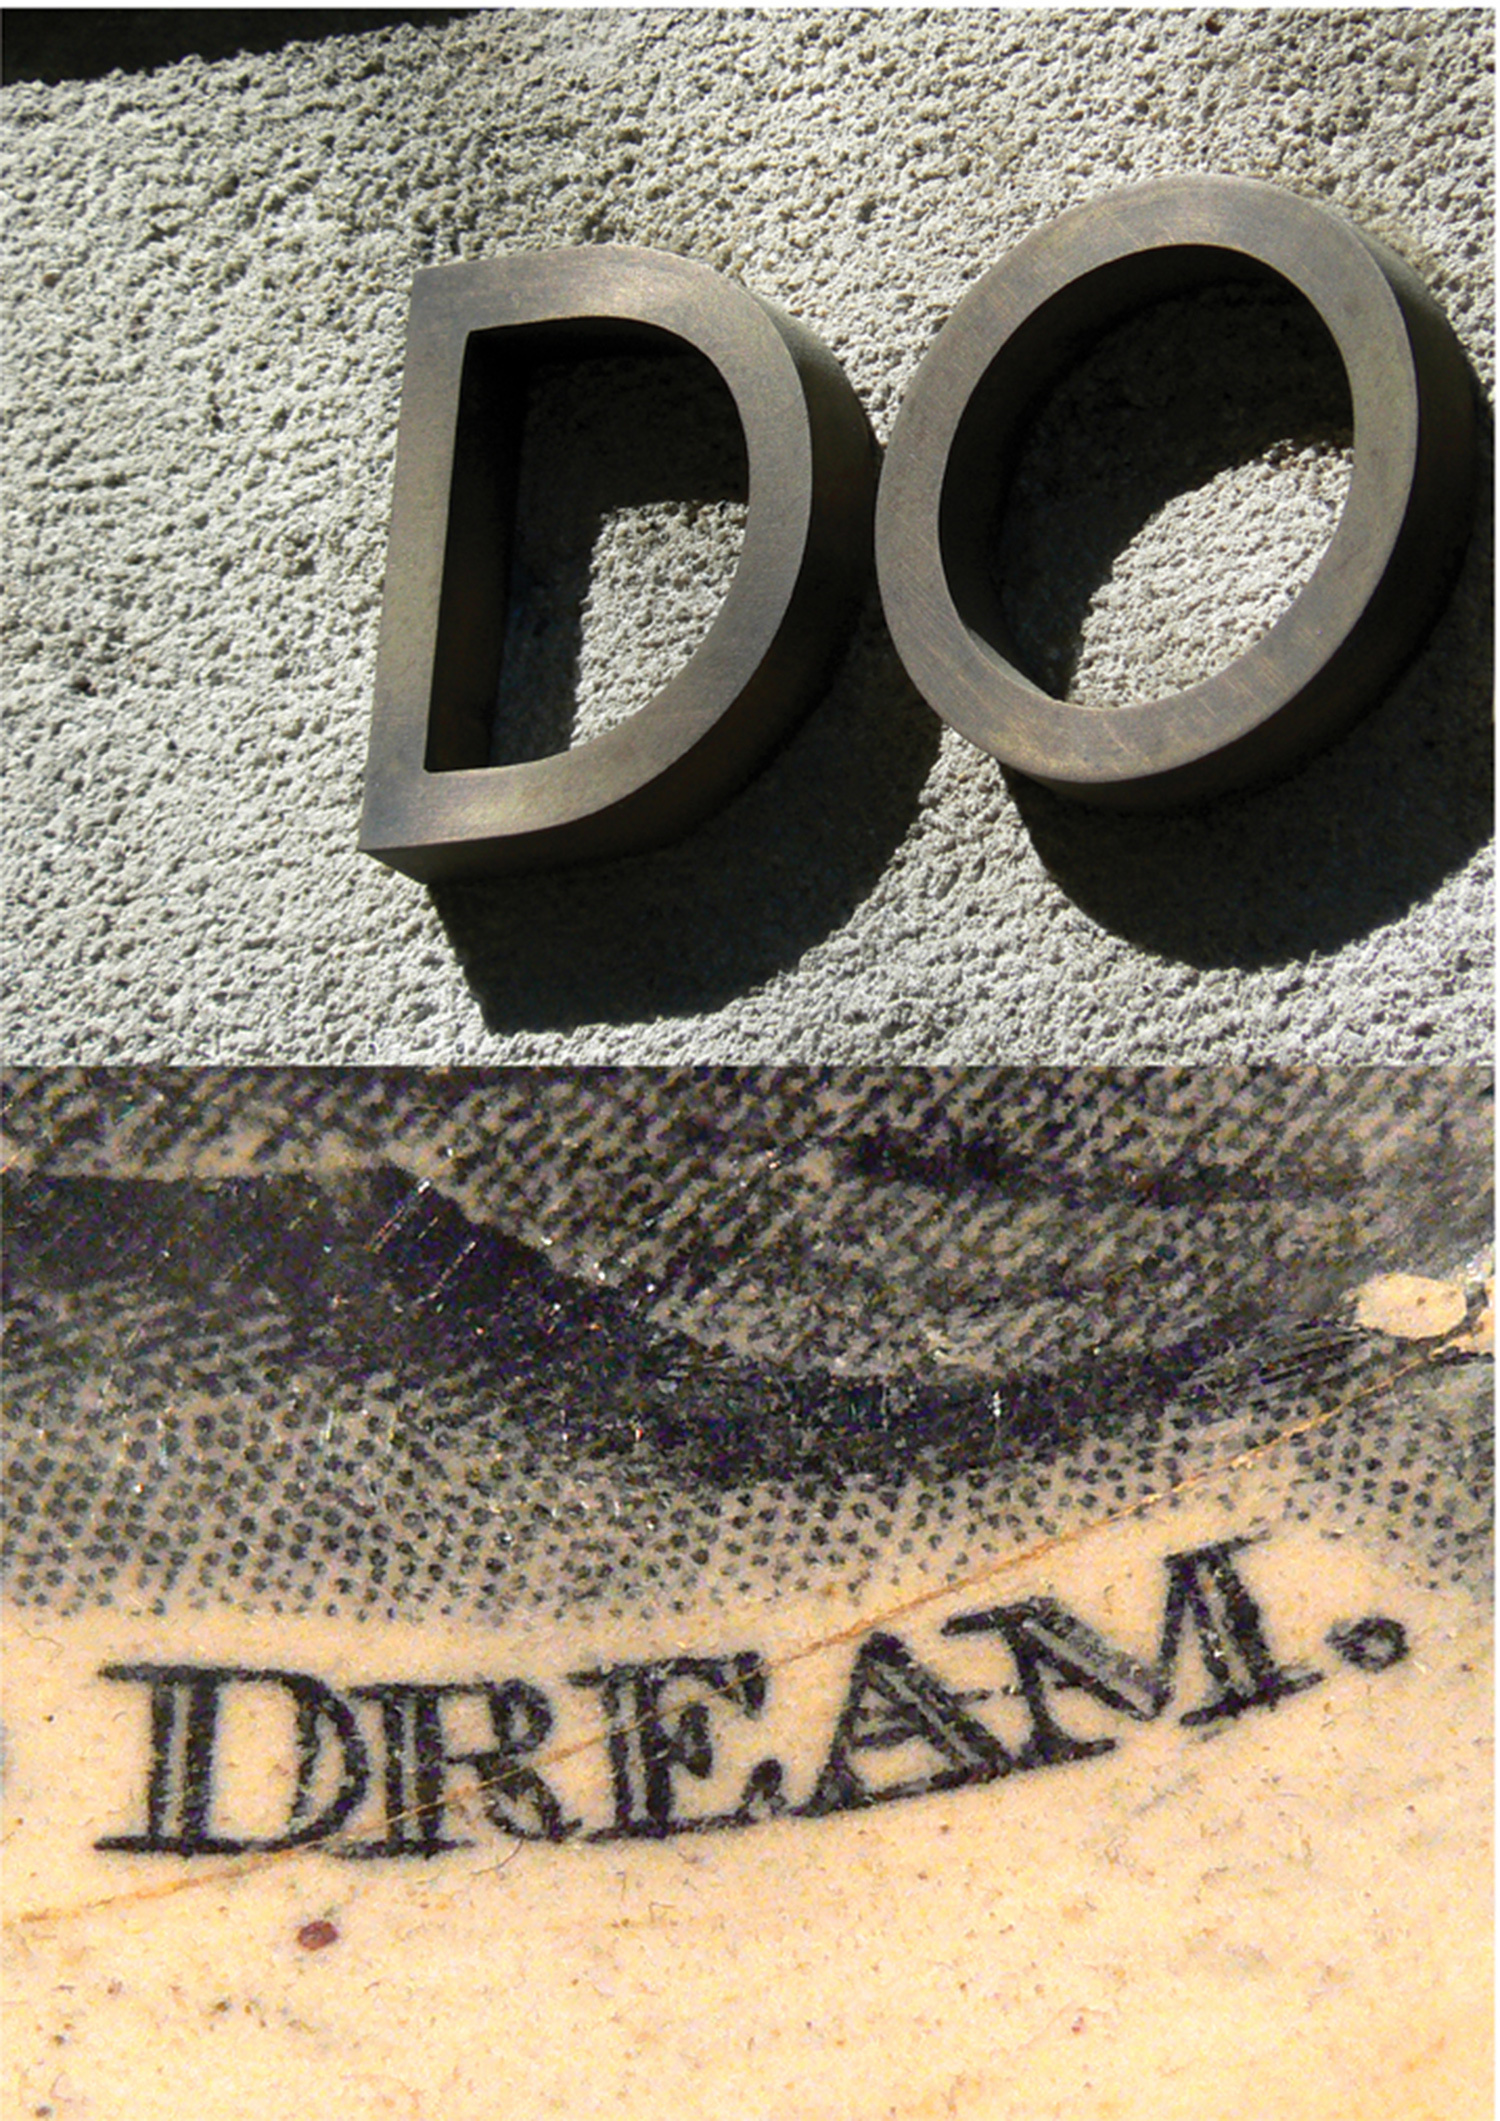 Do Dream by Phil Gray